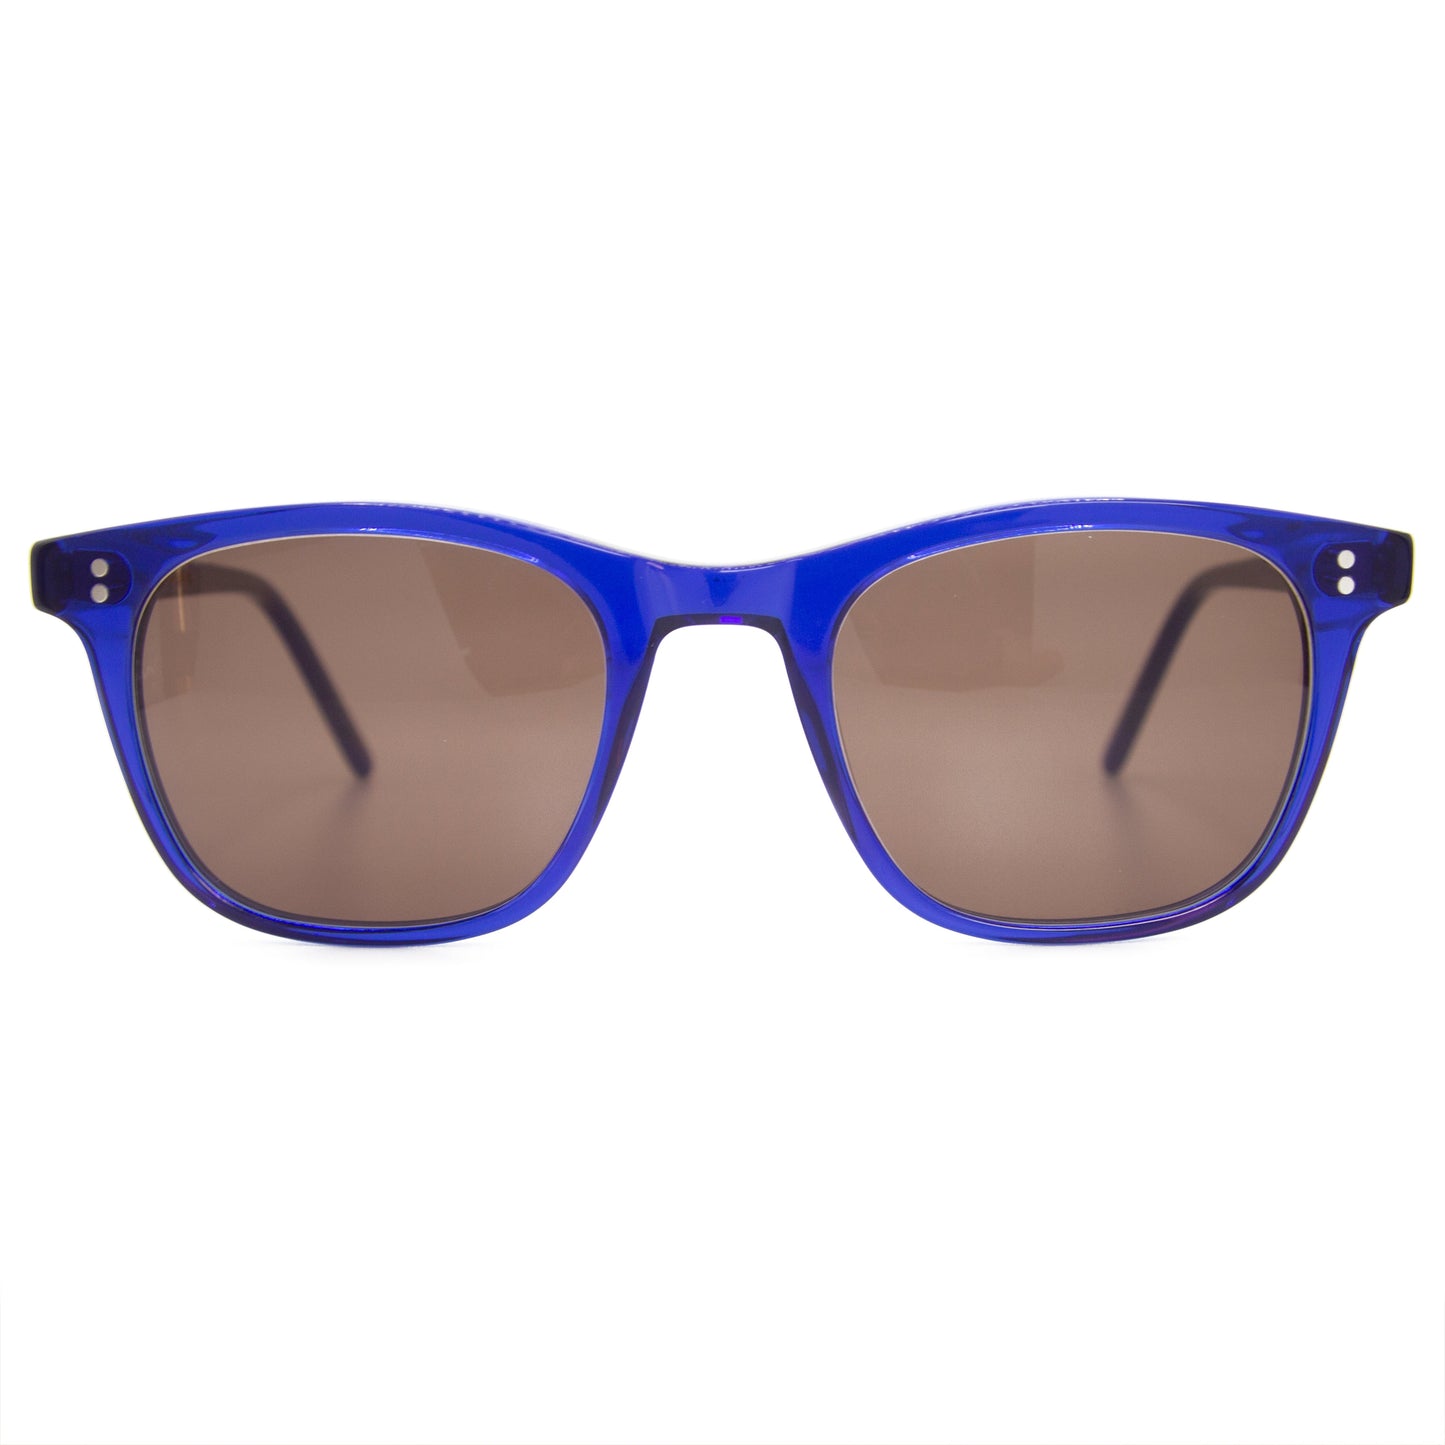 Soft Square Blue Sunglasses